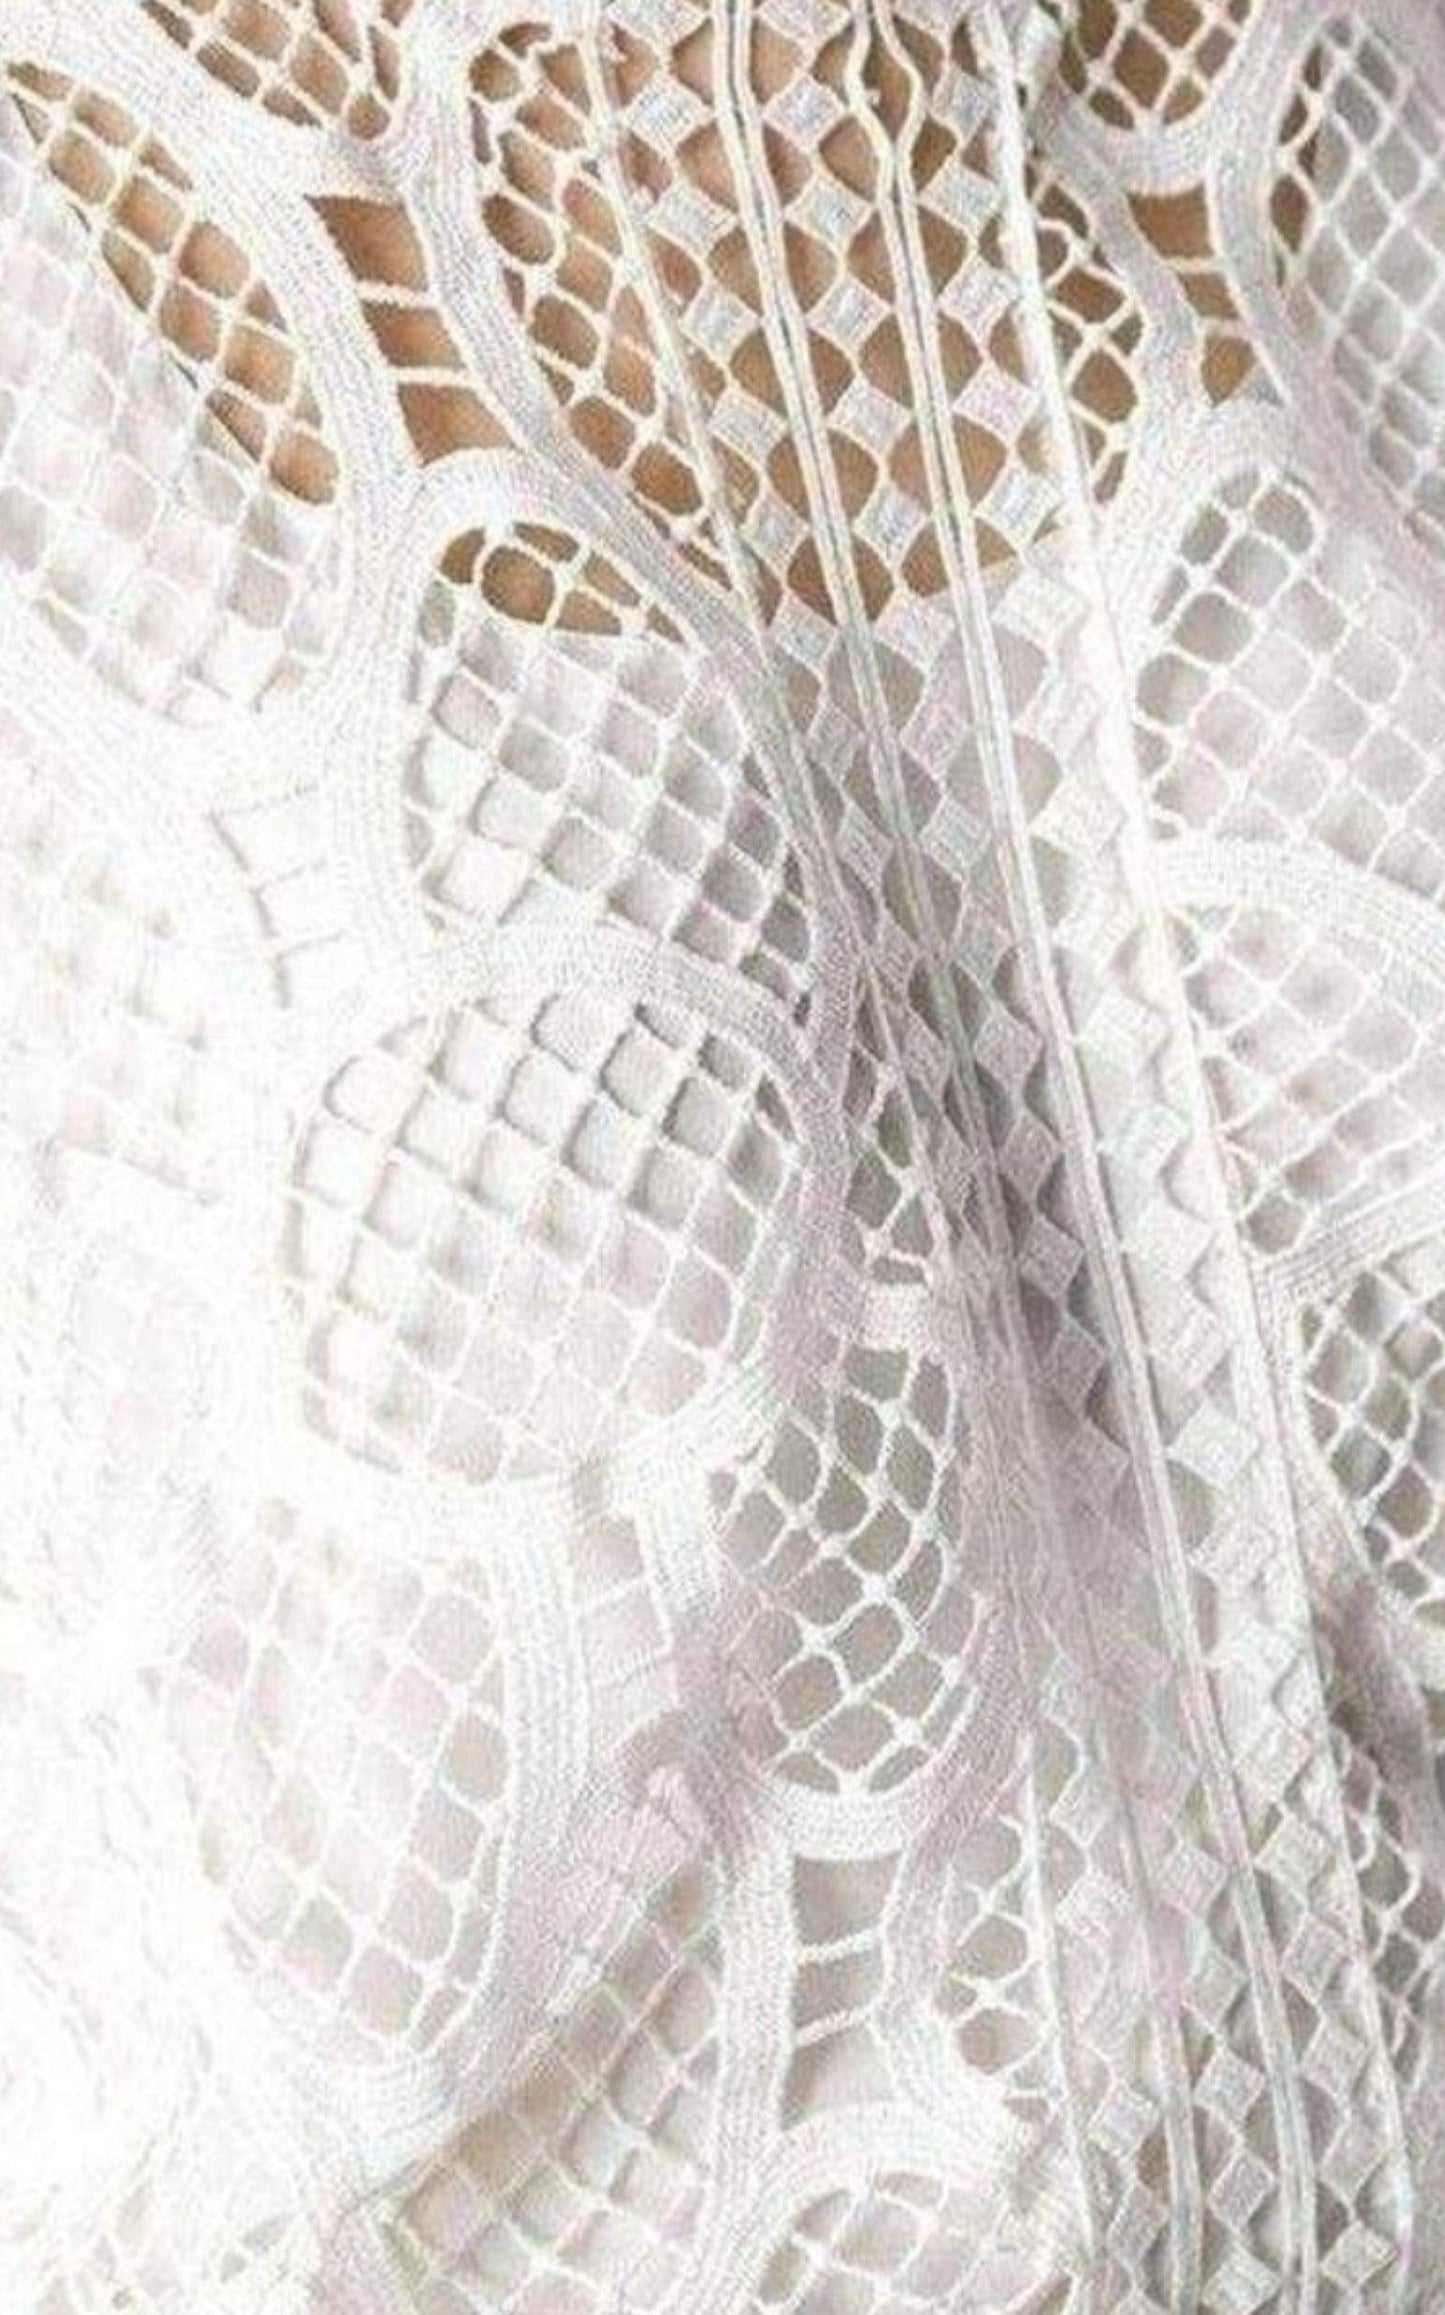 Copy of Crochet Lace Cotton Dress-Mini Dresses-Chloe-FR 38-White-Synthetics-Runway Catalog